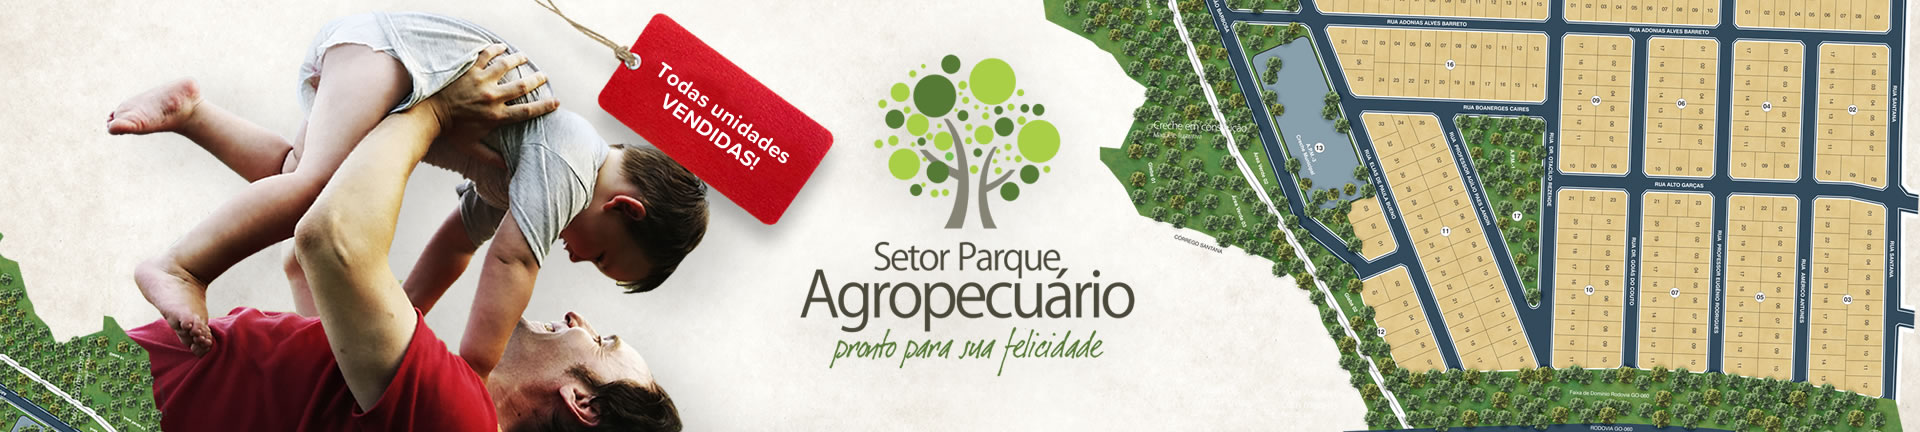 Setor Parque Agropecurio